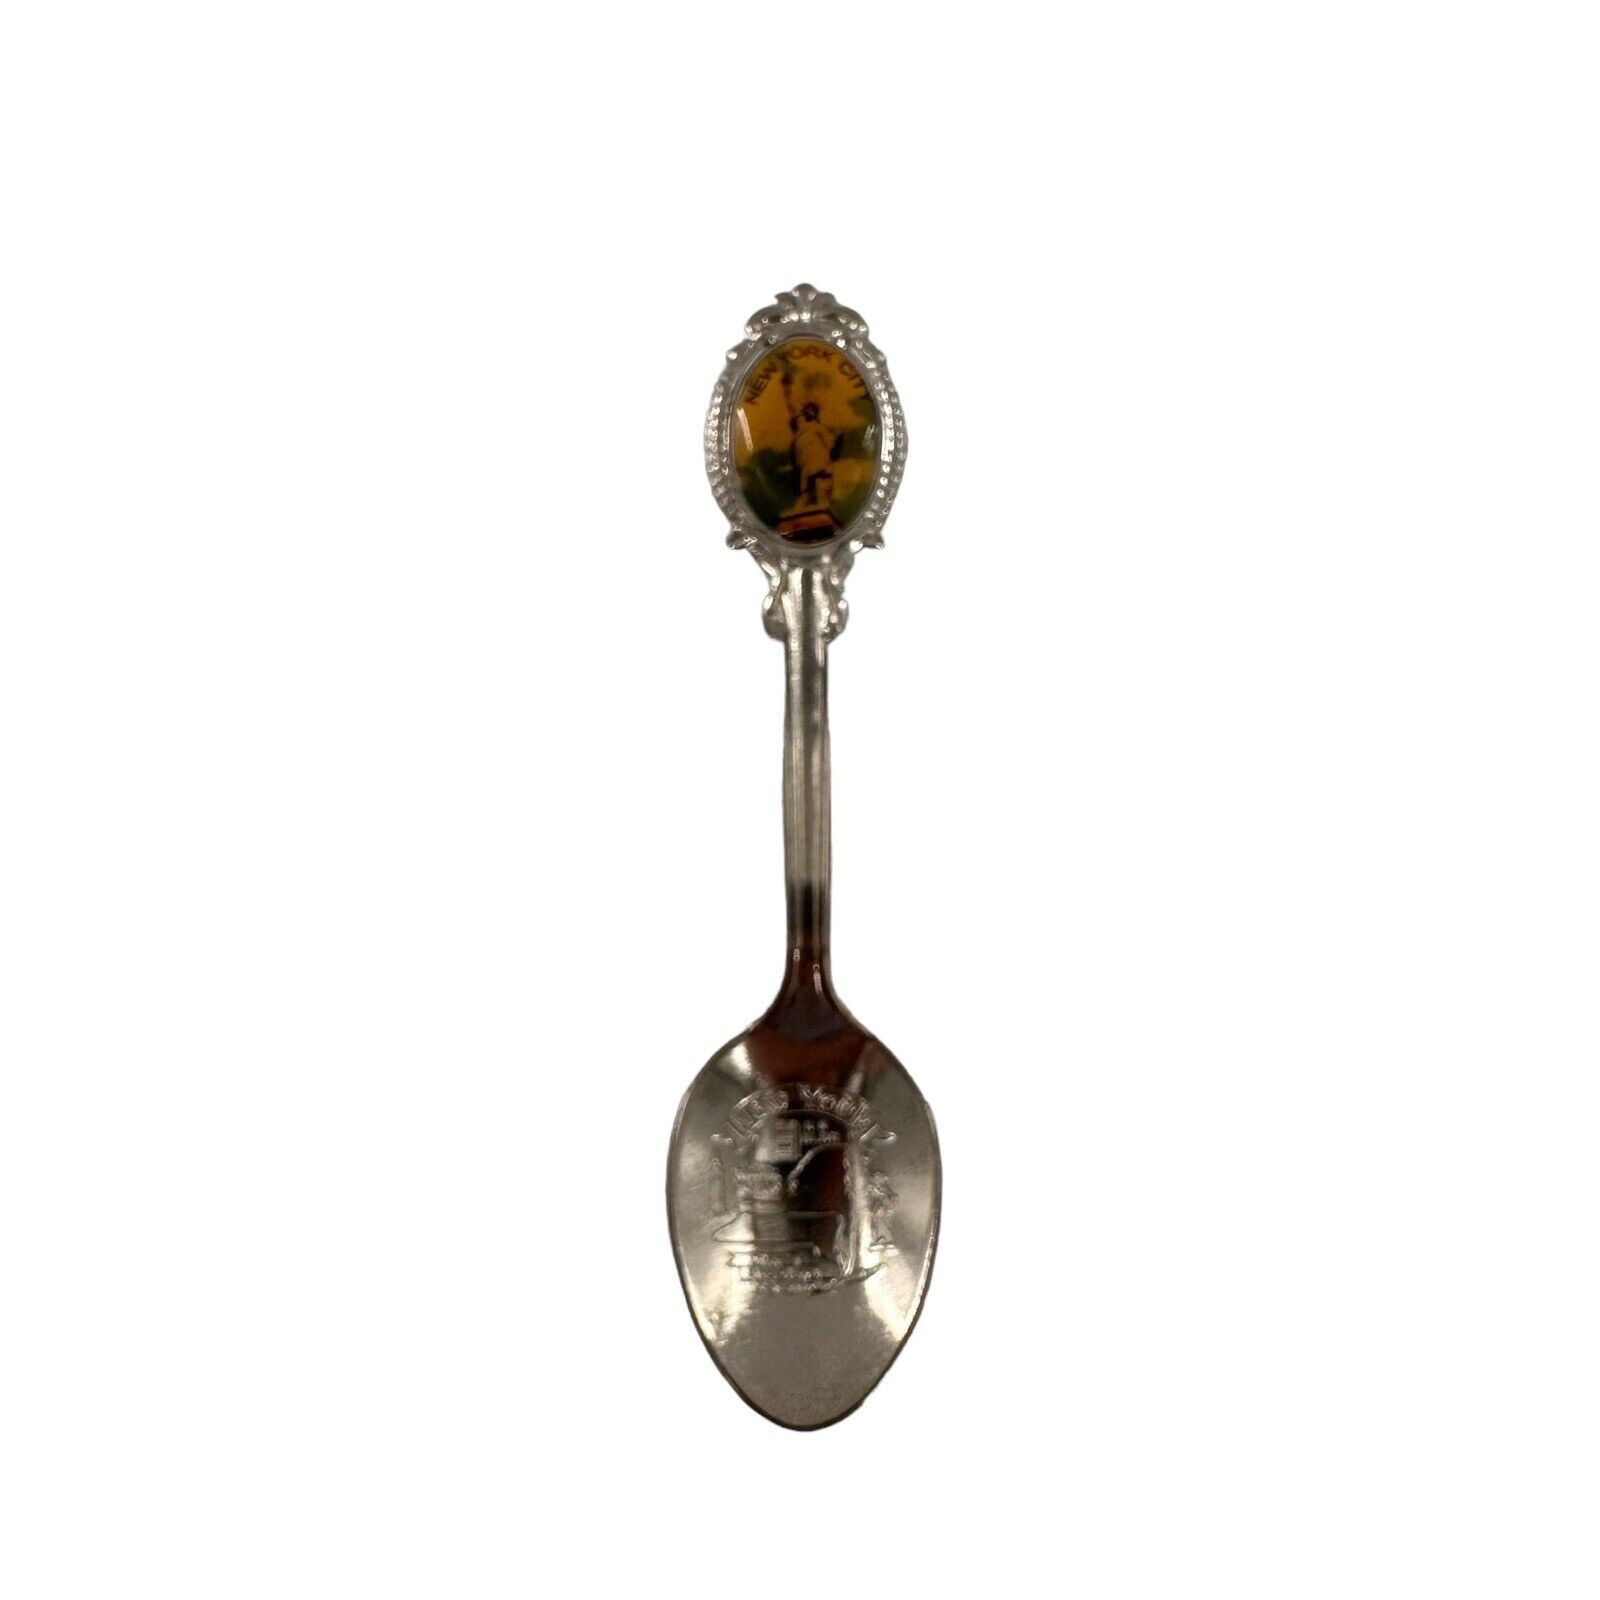 Vintage Souvenir Spoon US Collectible New York City Silver Played Collectible